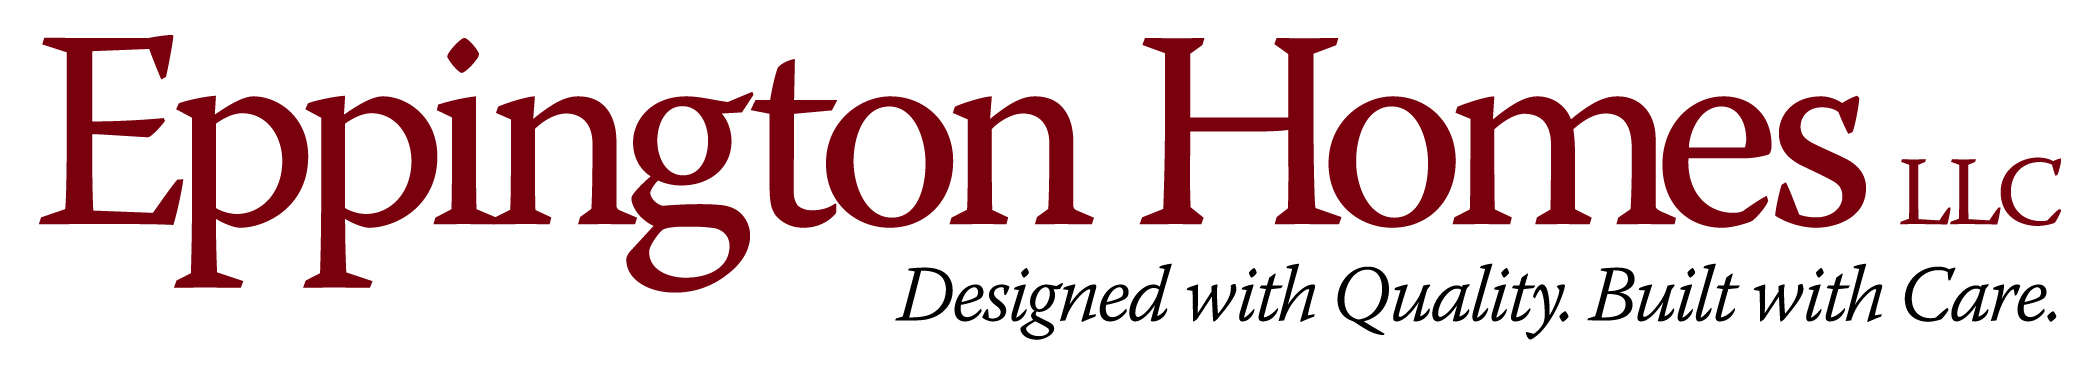 Eppington Homes LLC Logo